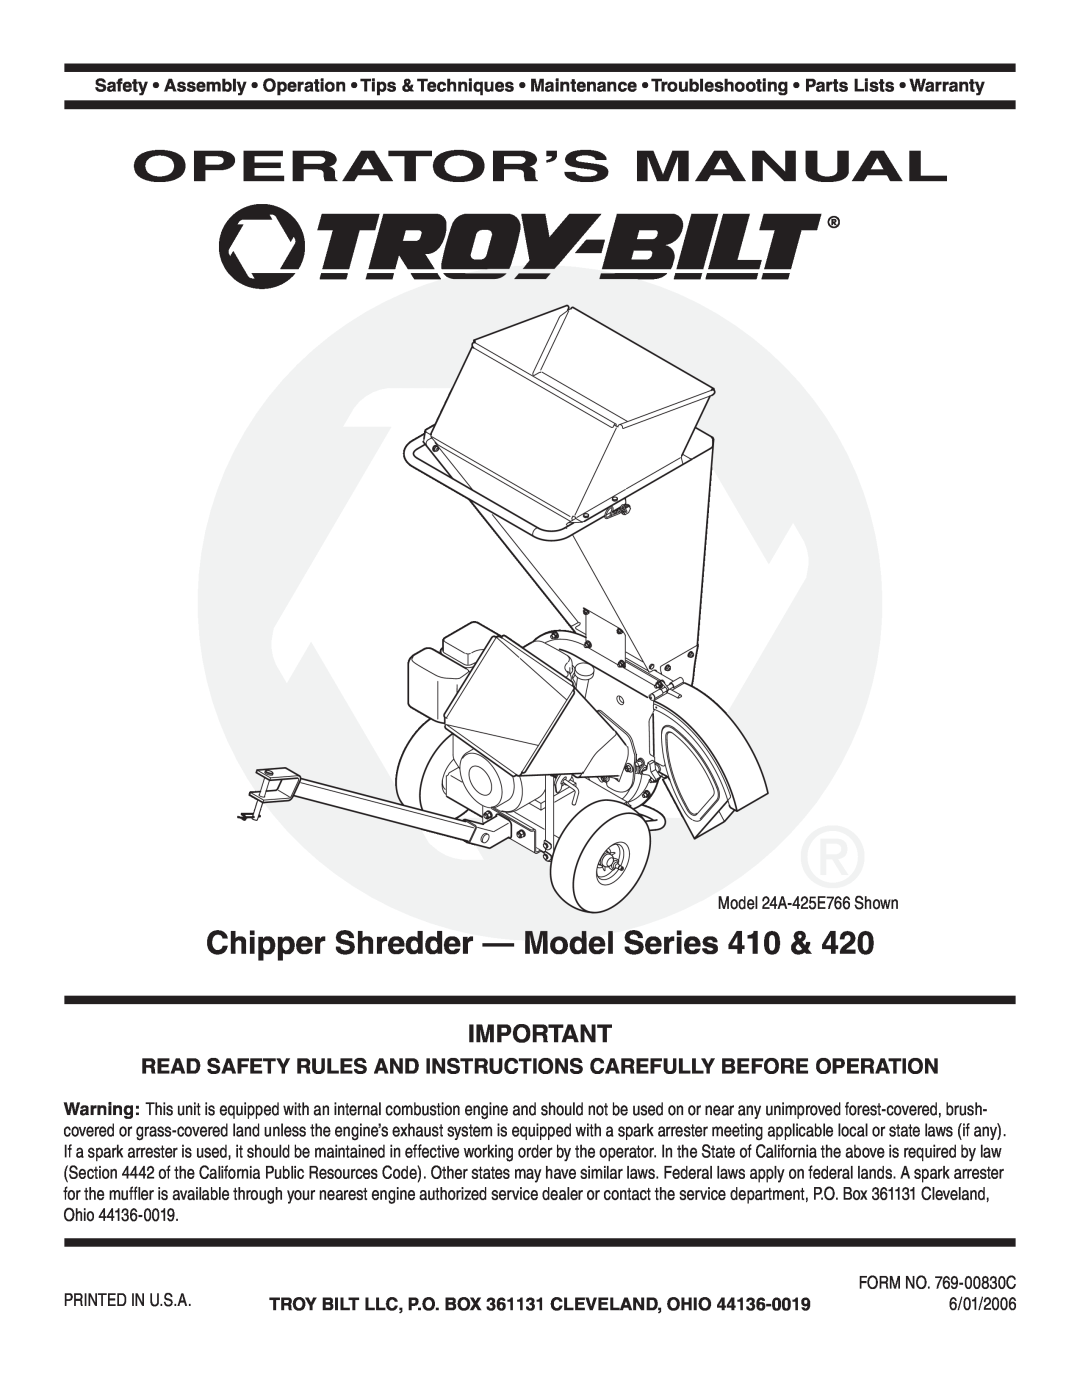 Troy-Bilt 410, 420 warranty Operator’S Manual, Chipper Shredder - Model Series 